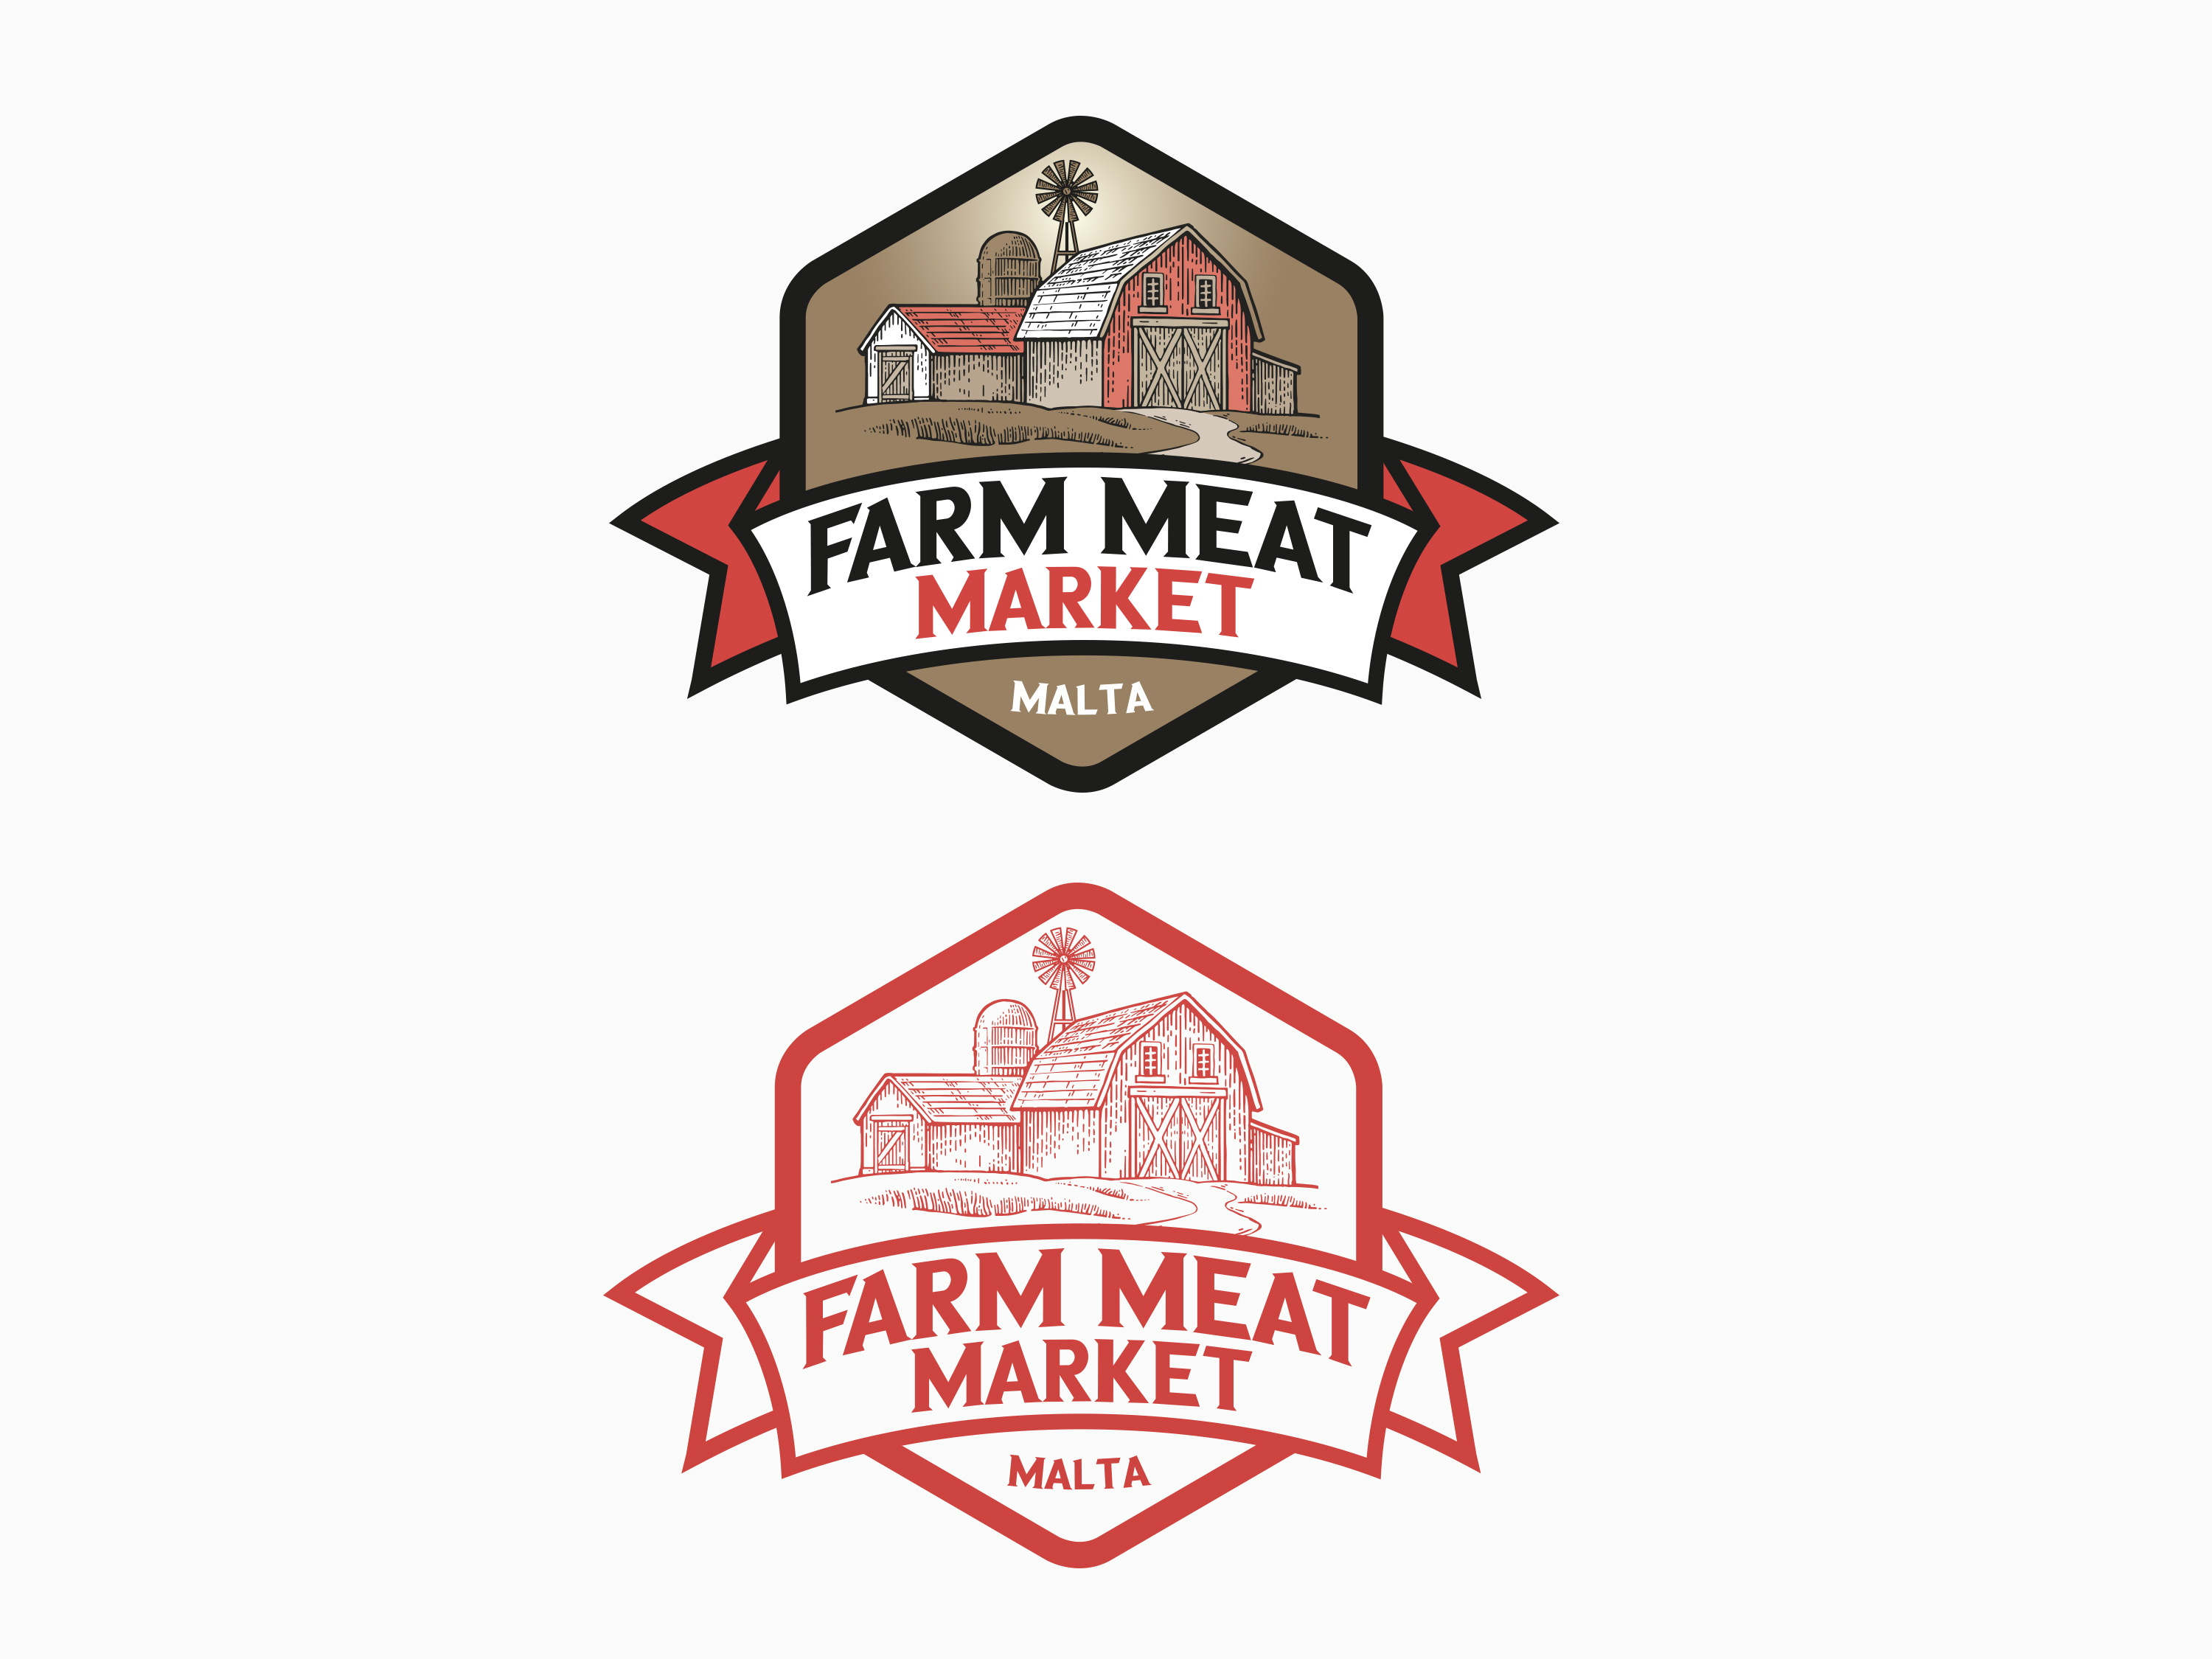 Farm Meat Market logos